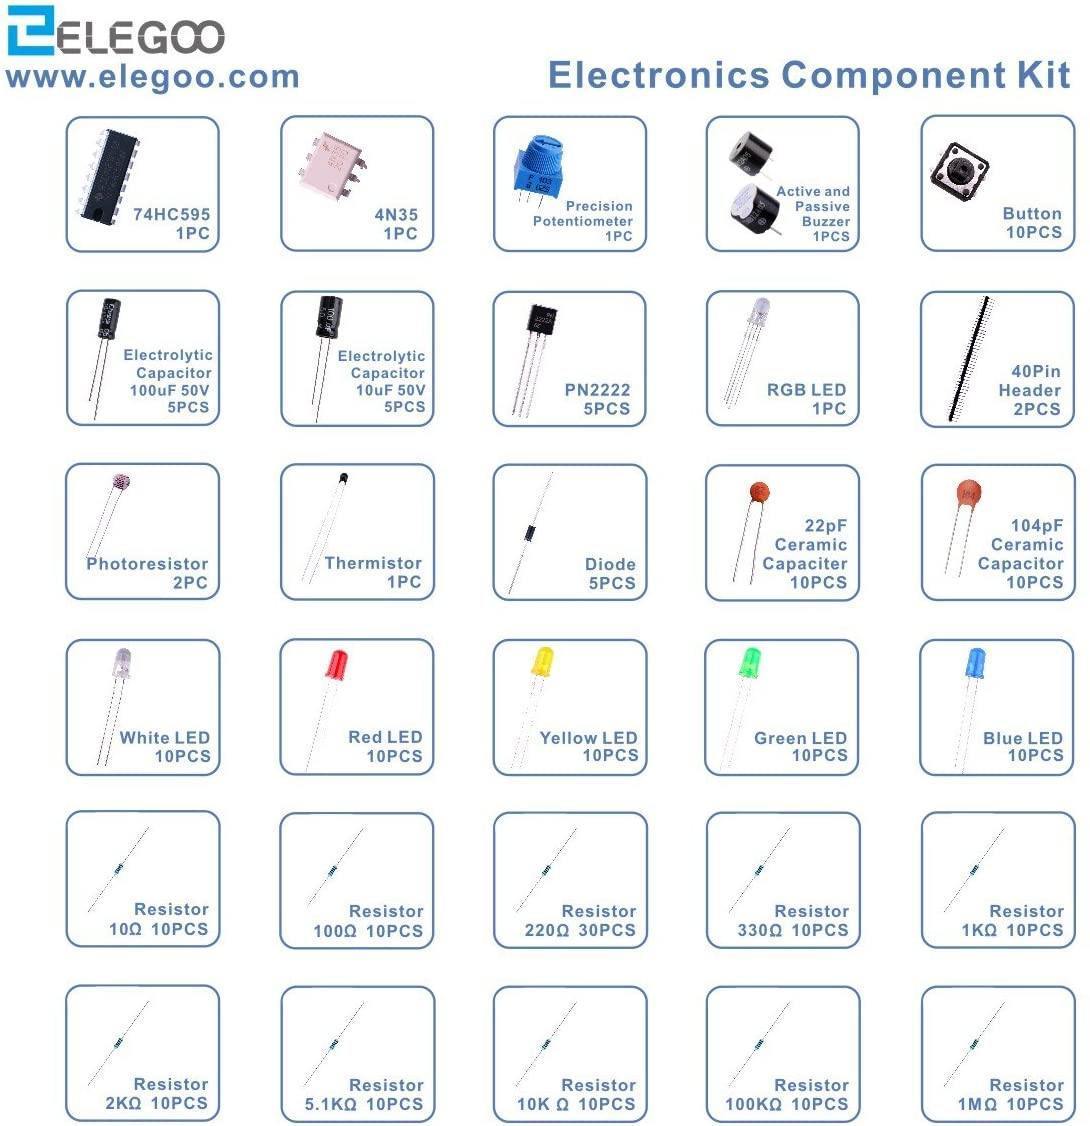 ELEGOO Upgraded Electronics Fun Kits (4 Versions) for Arduino, Raspberry Pi, STM32 Arduino STEM Kits elegoo-shop C)E1 